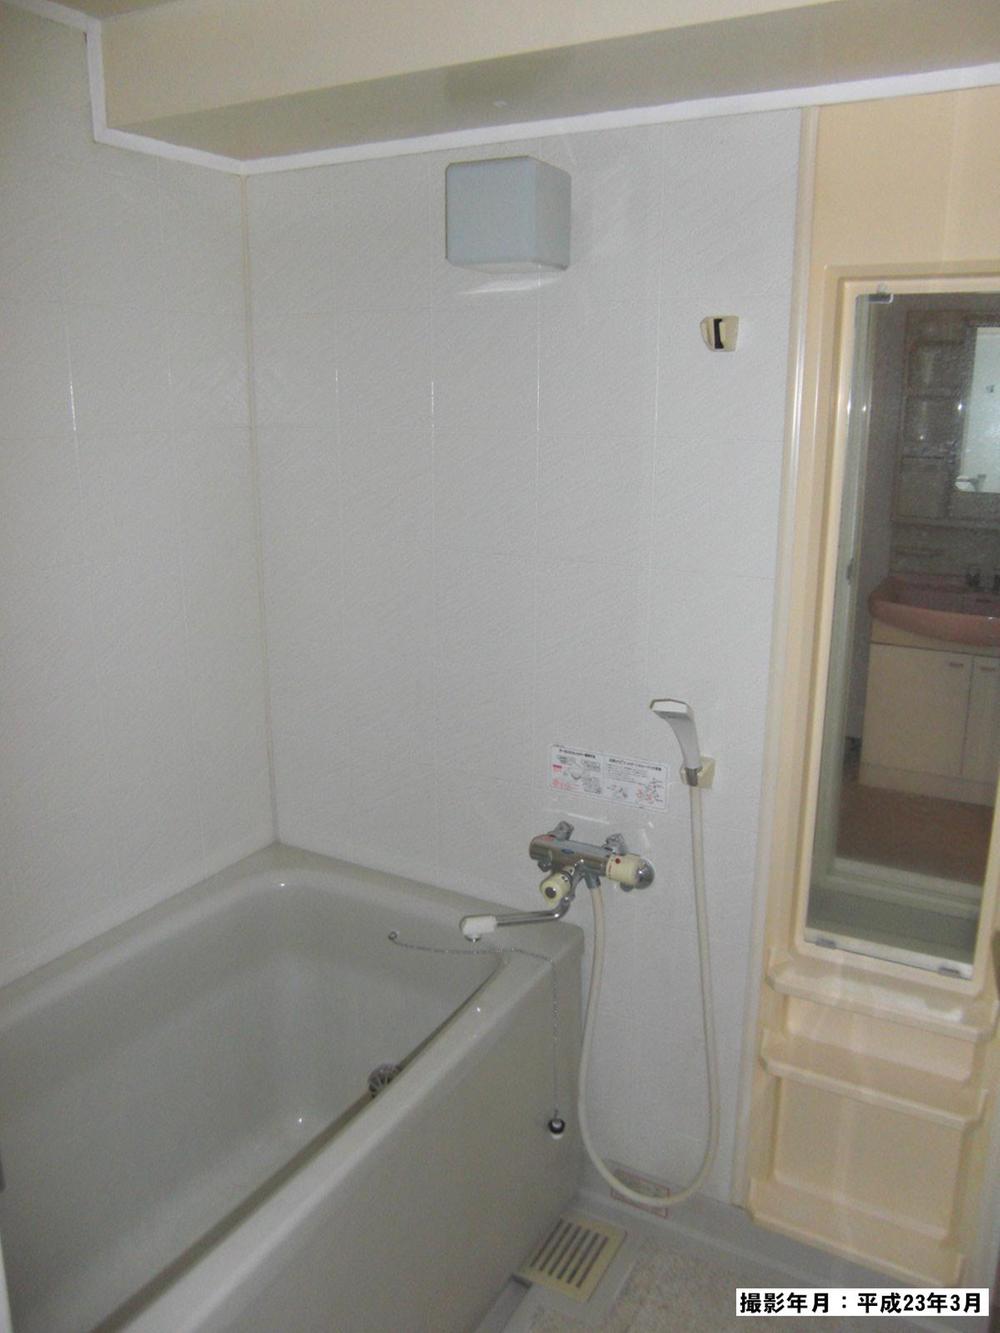 Bathroom. Indoor (March 2011) shooting